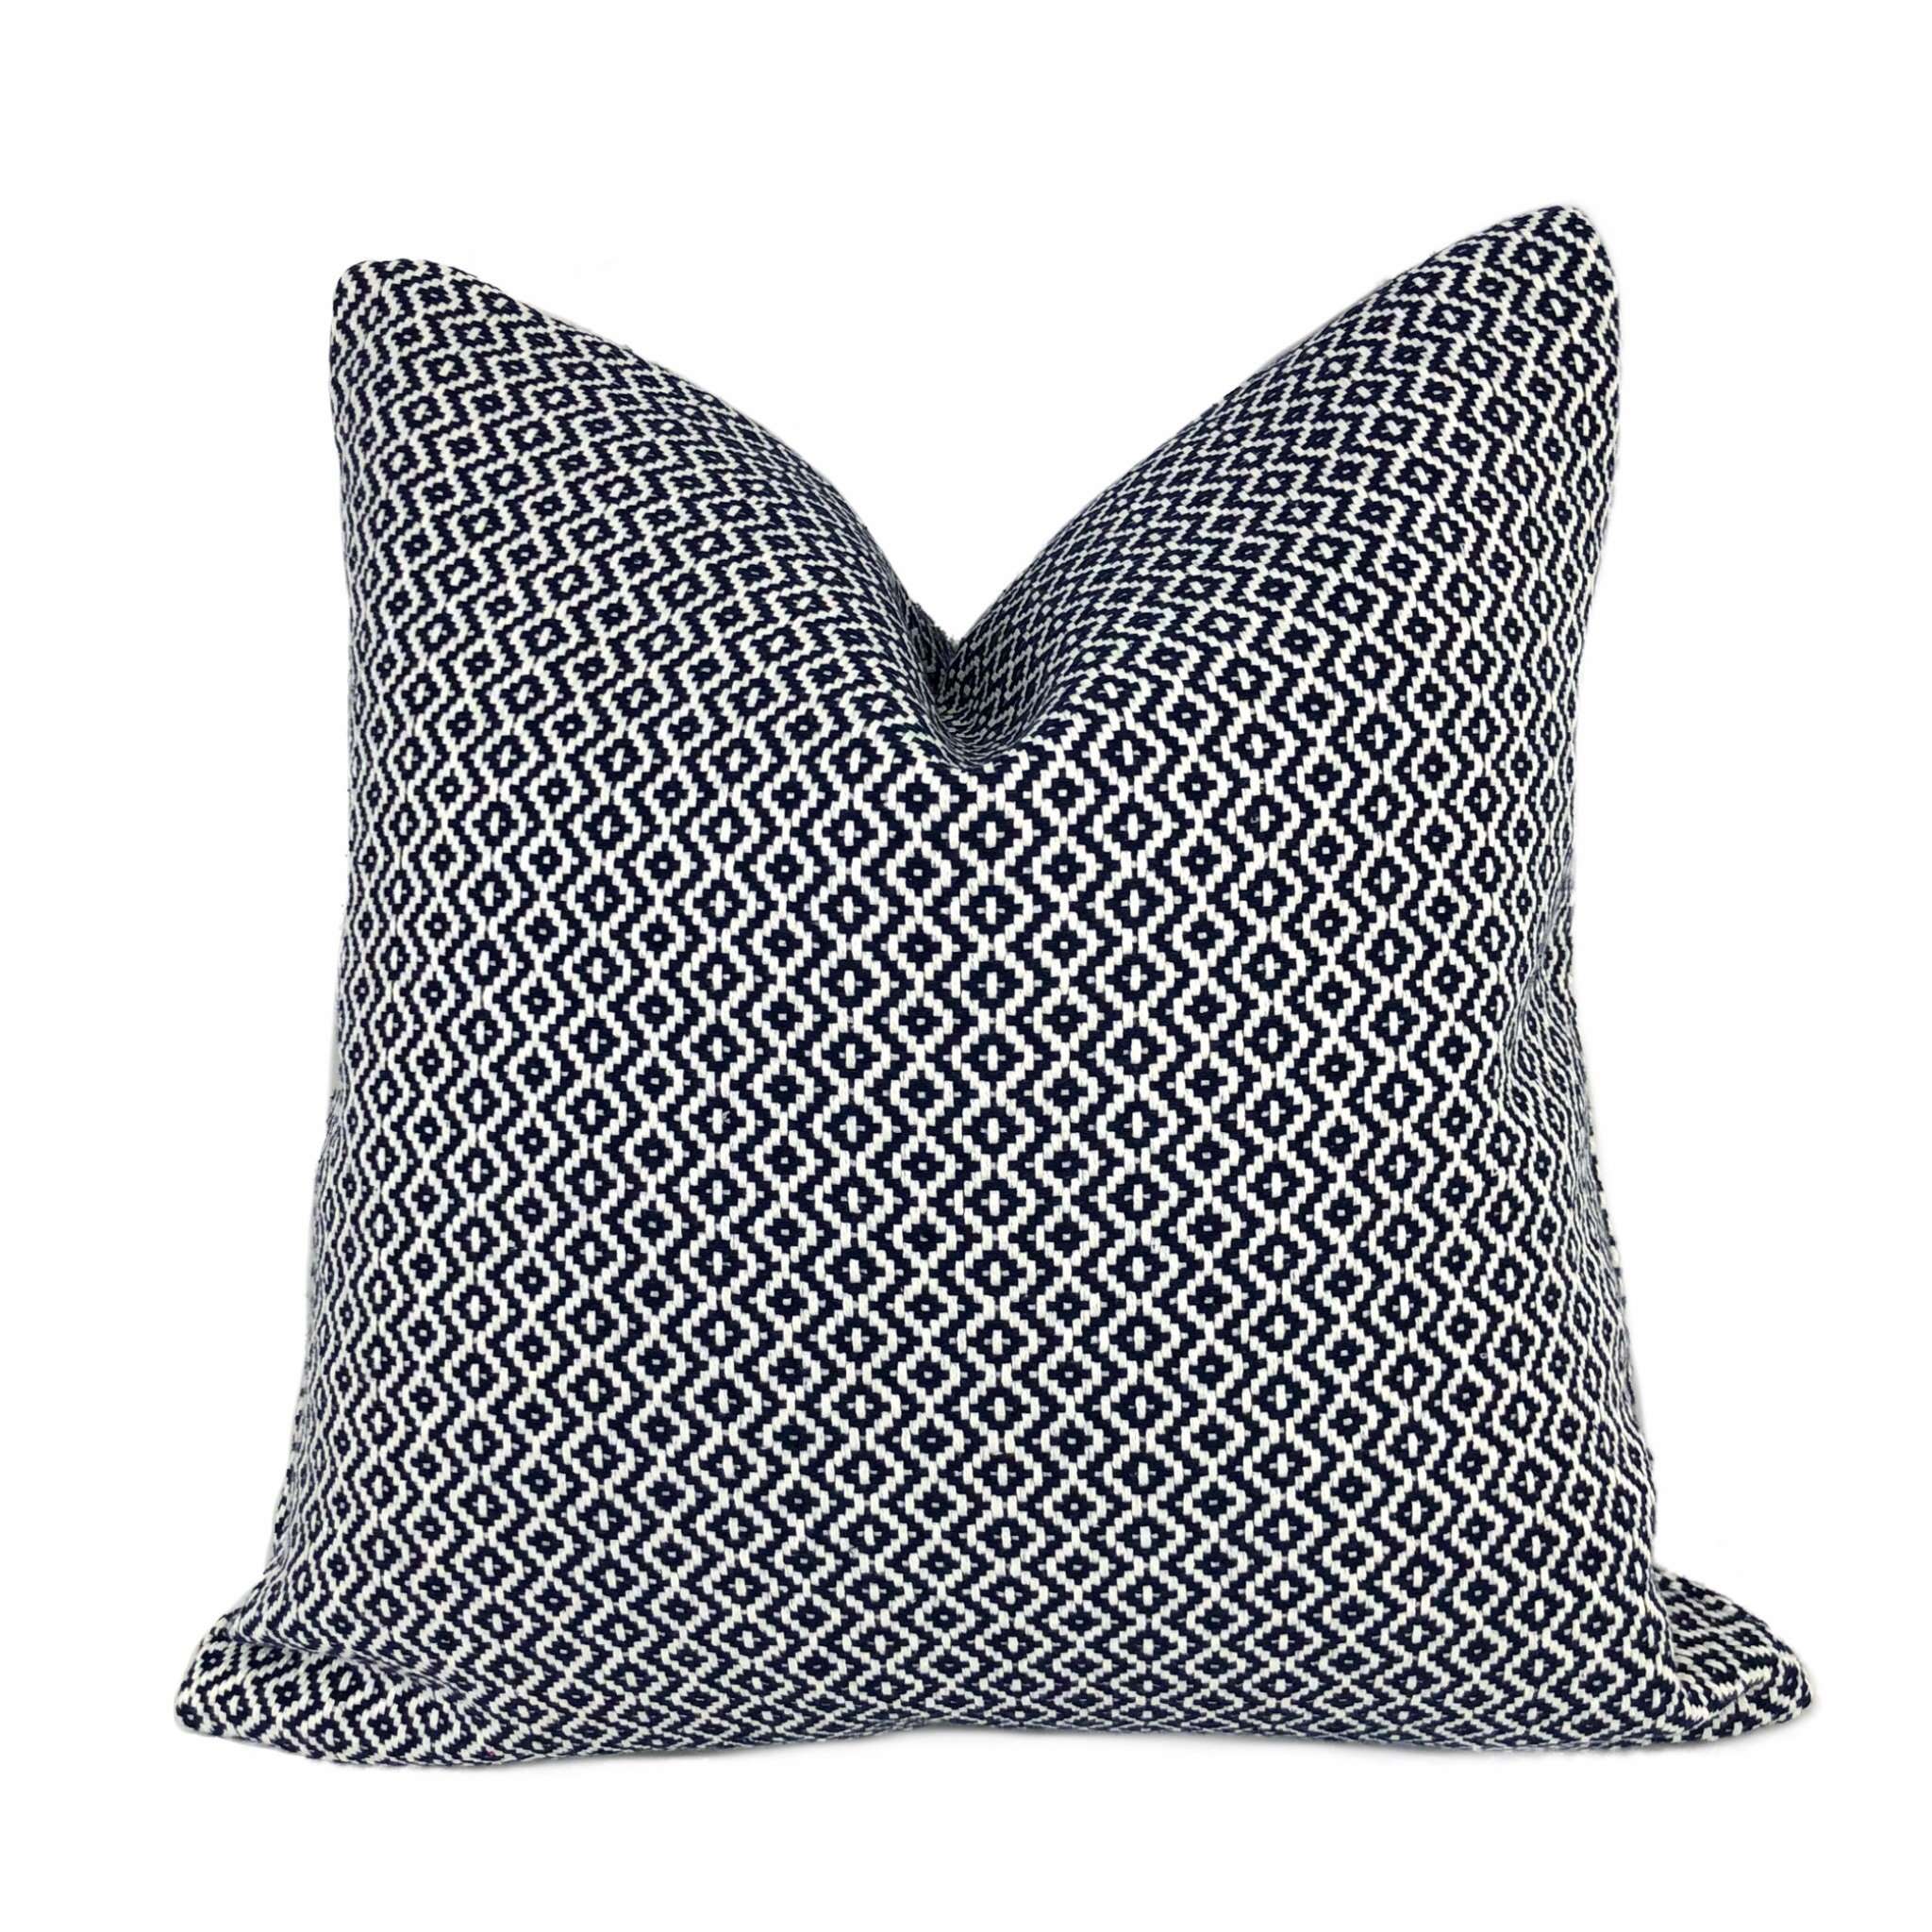 Navy Blue White Basketweave Diamonds Pillow Cover Cushion Pillow Case Euro Sham 16x16 18x18 20x20 22x22 24x24 26x26 28x28 Lumbar Pillow 12x18 12x20 12x24 14x20 16x26 by Aloriam